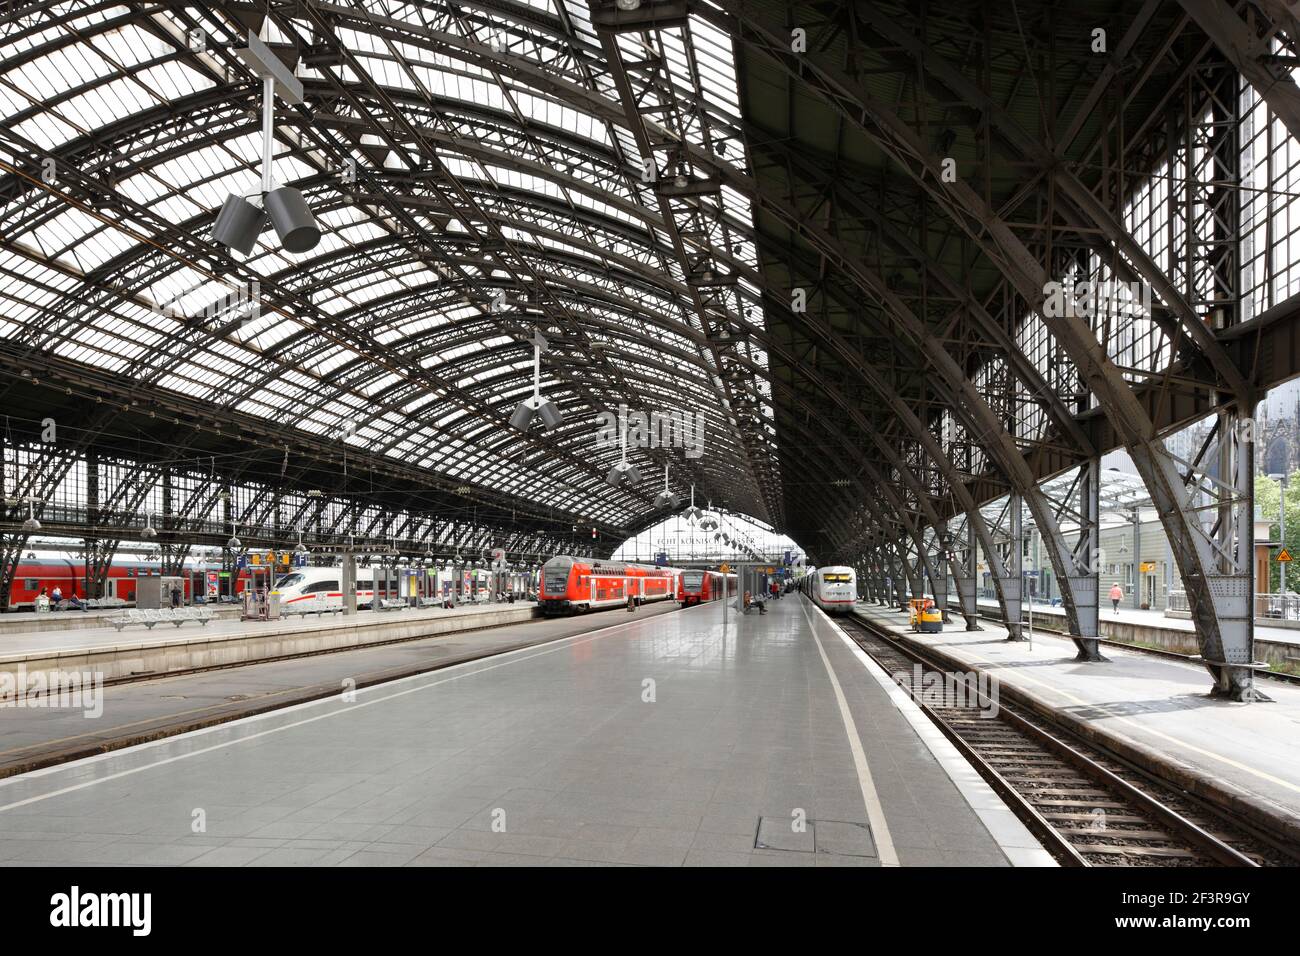 Bahnsteighalle von 1894, Kˆln, Hauptbahnhof Stock Photo